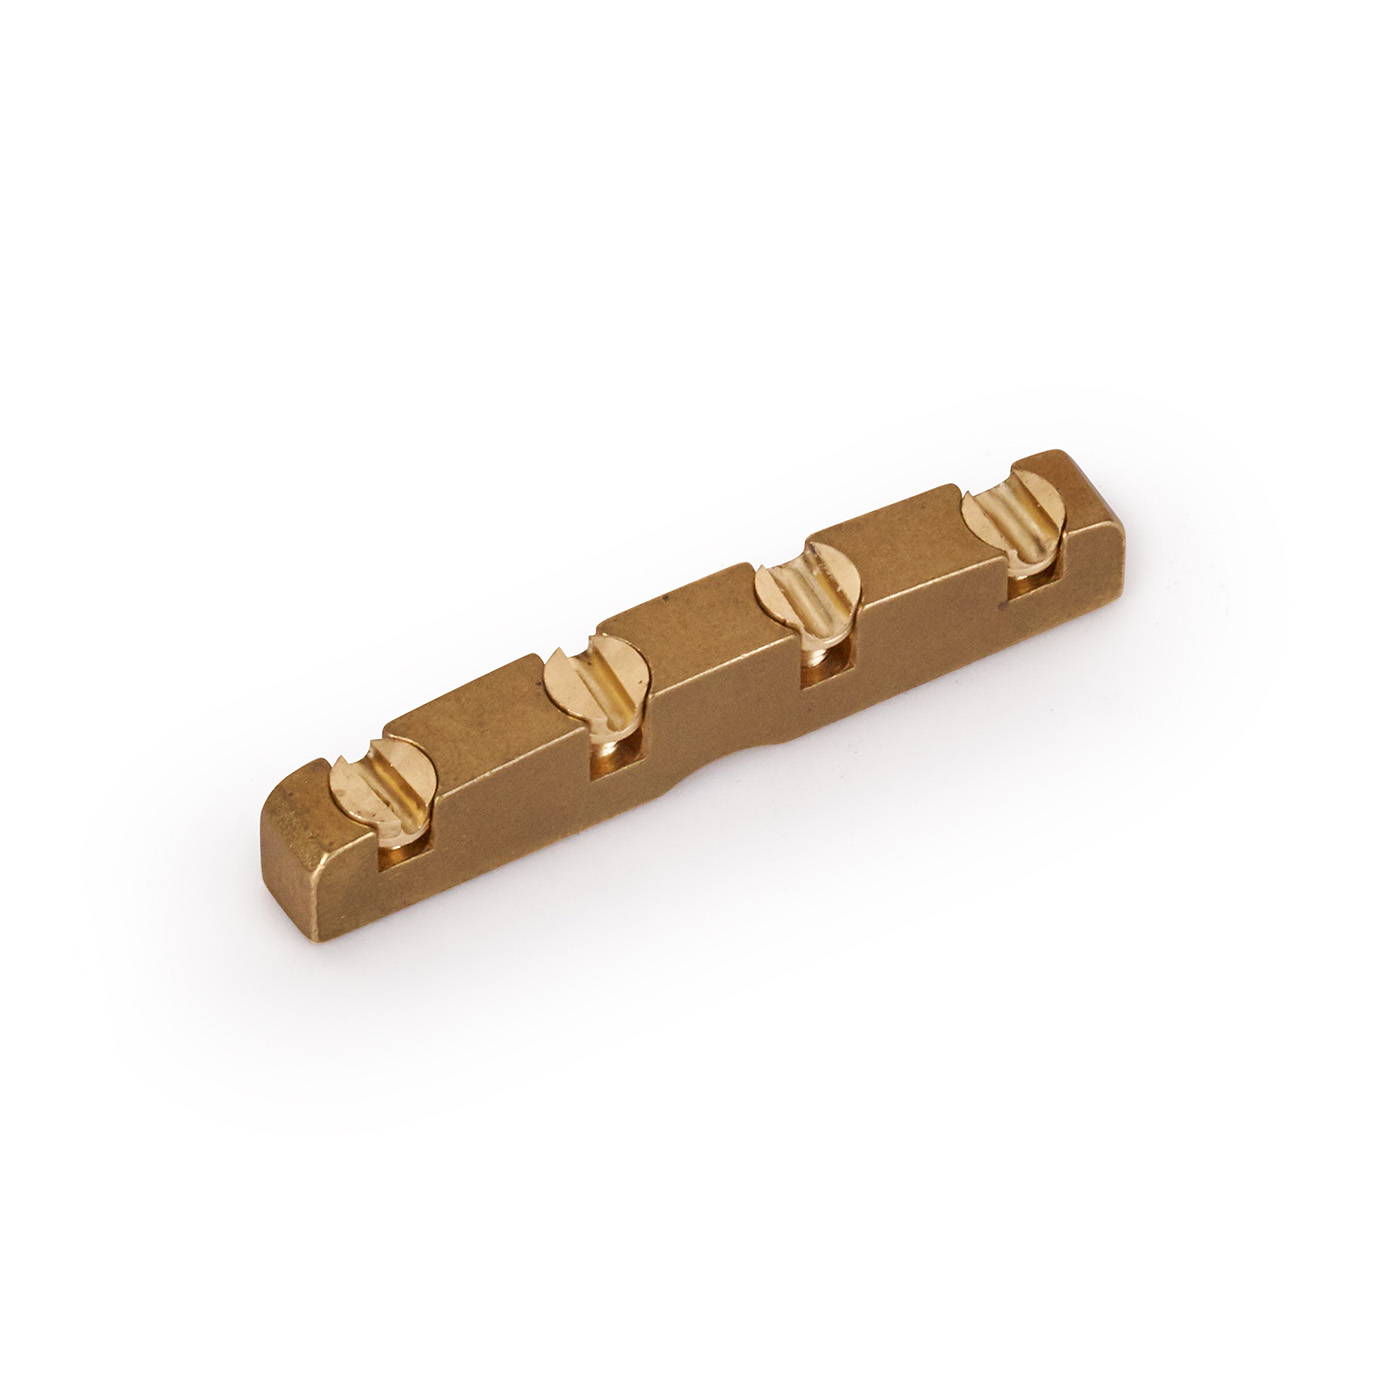 Warwick Parts - Just-A-Nut, 4-String, 44 mm width - Brass